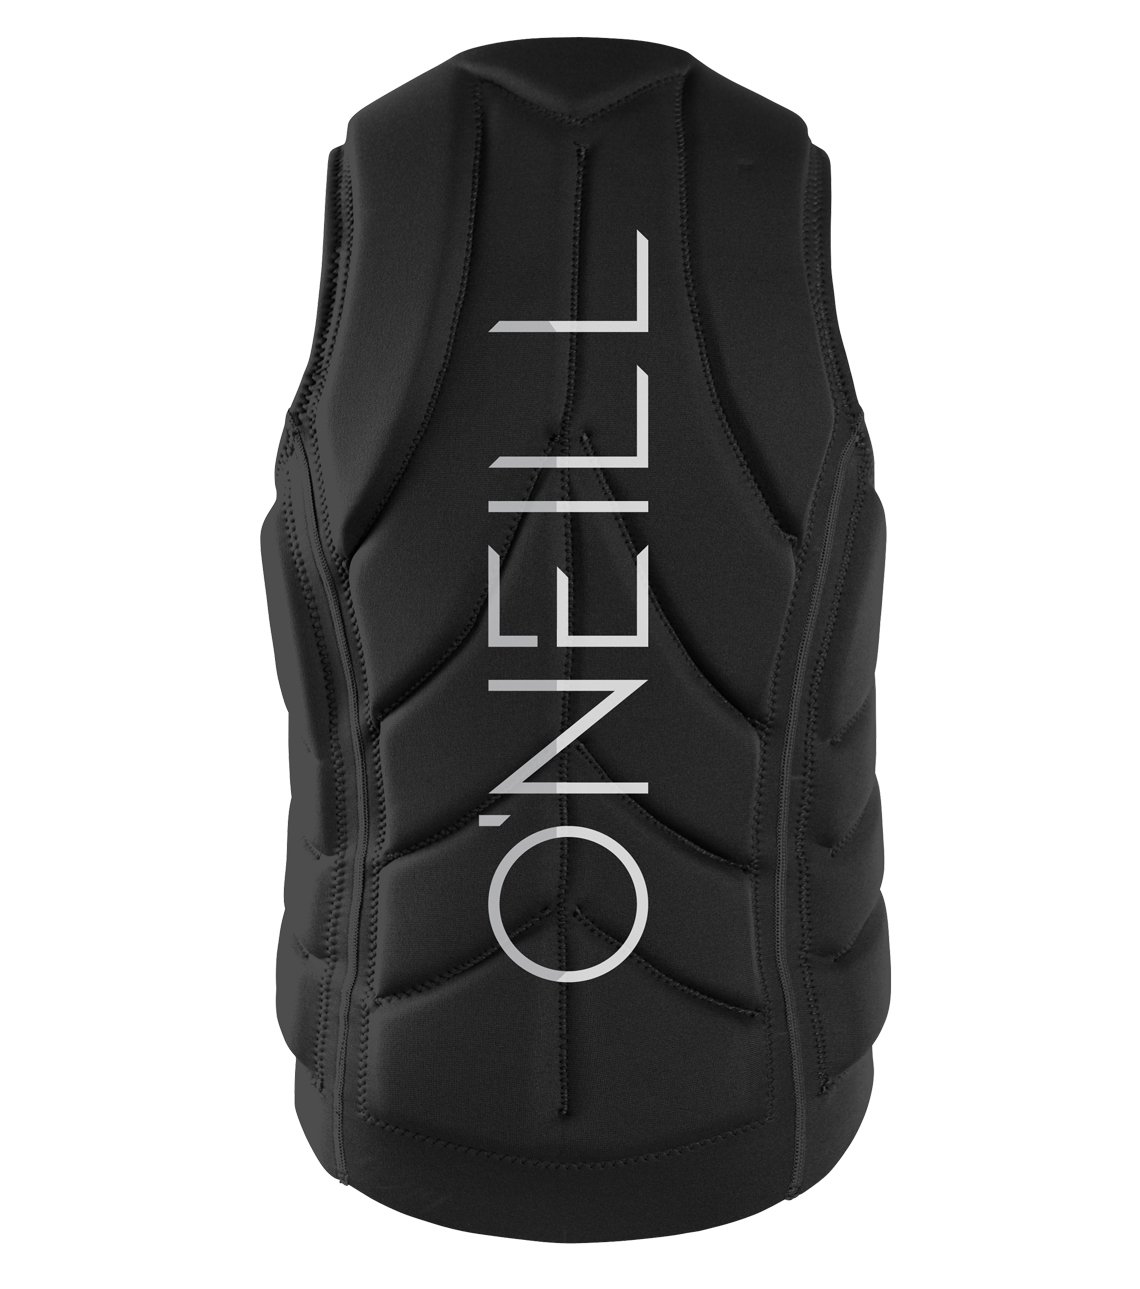 O'Neill Wetsuits Men's Slasher Comp Life Vest, Black, Large